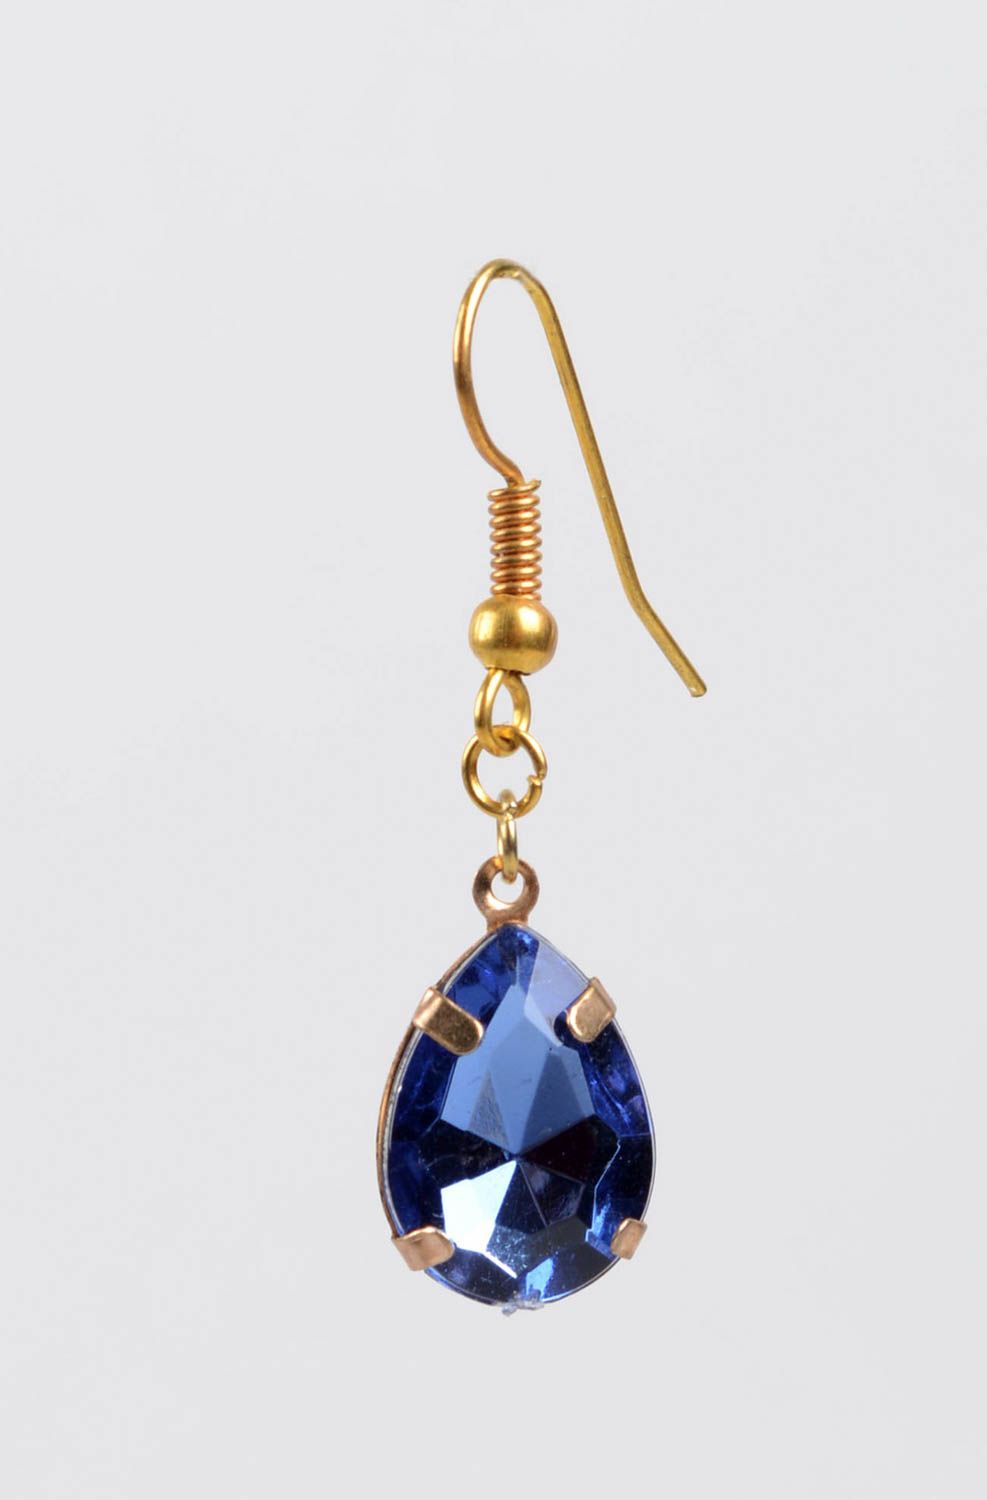 Stylish earrings designer jewelry handmade earrings fashion accessories photo 2